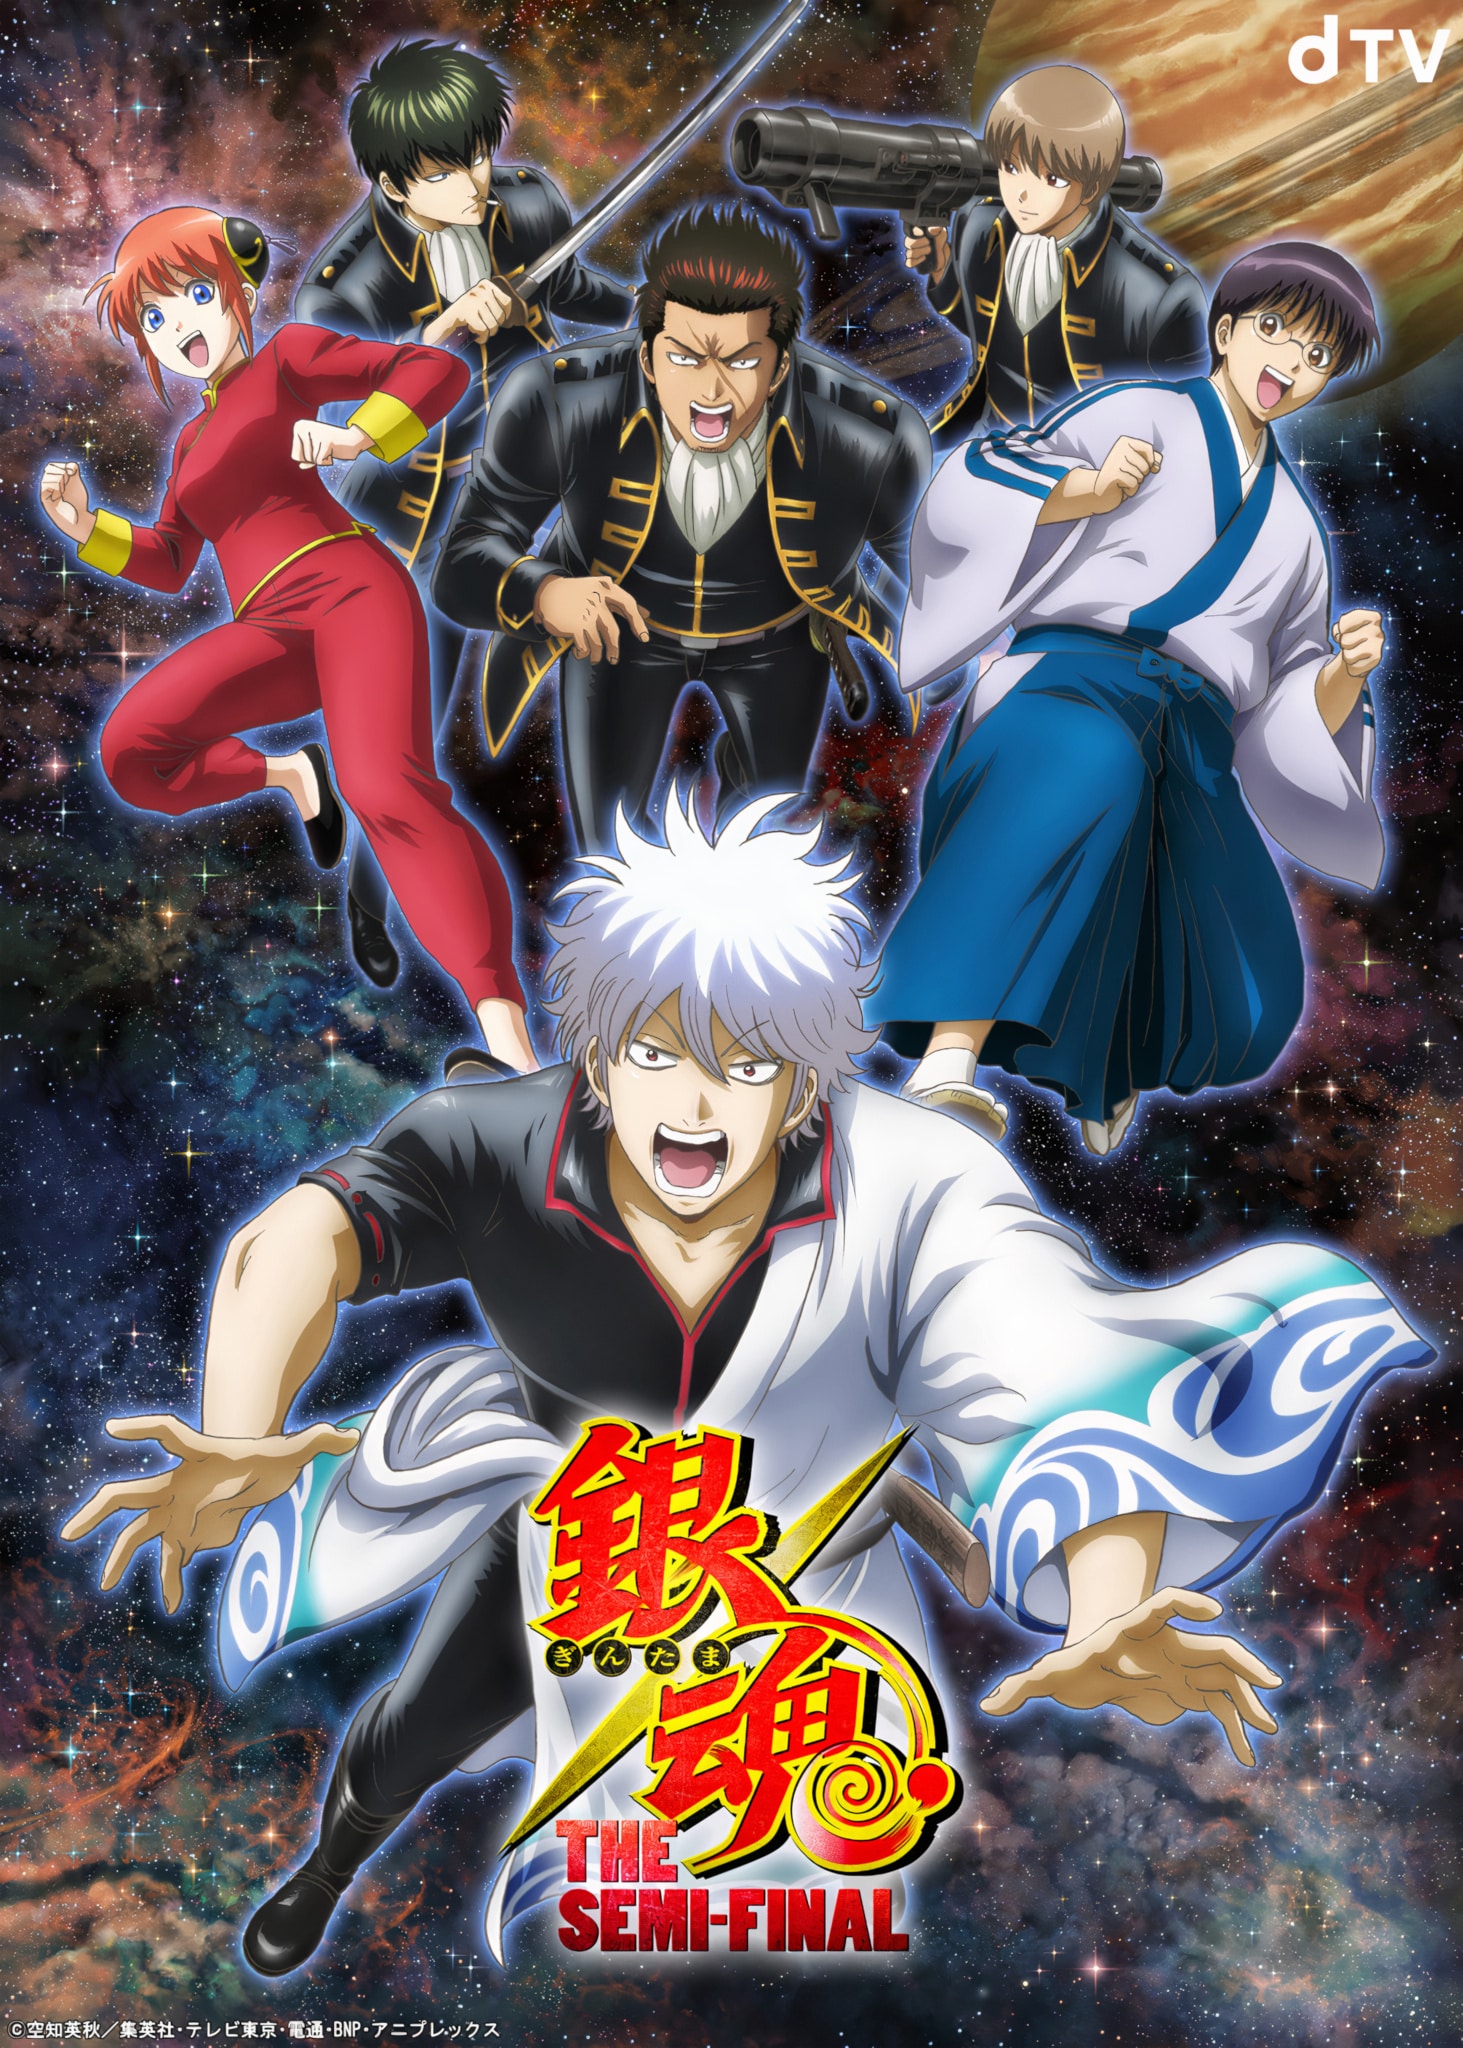 Annonce du nouvel anime Gintama The Semi-final